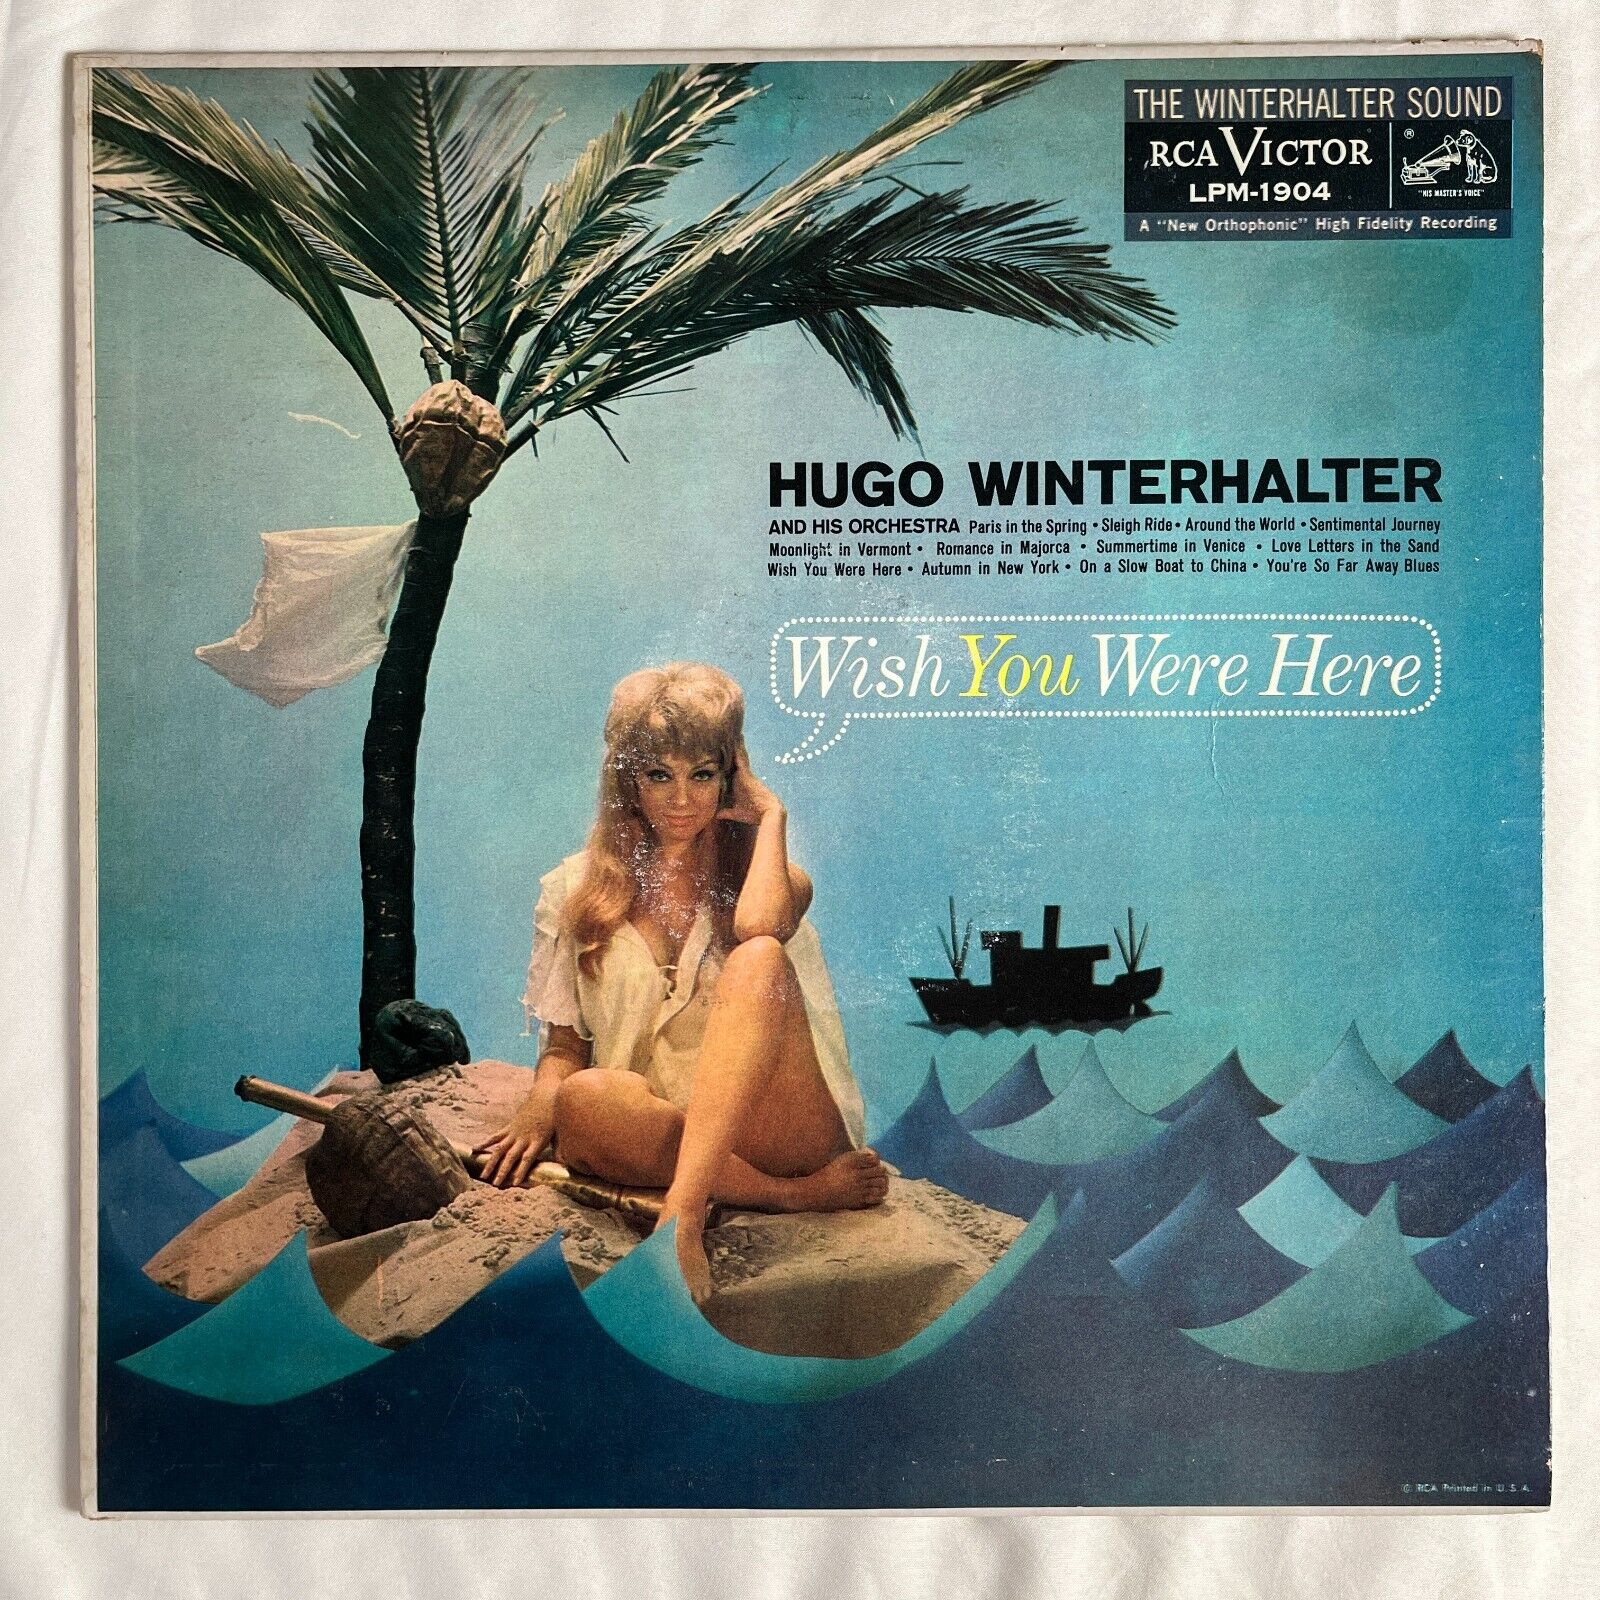 HUGO WINTERHALTER Wish You Were Here 1959 Vinyl LP RCA LPM-1904 - VG+